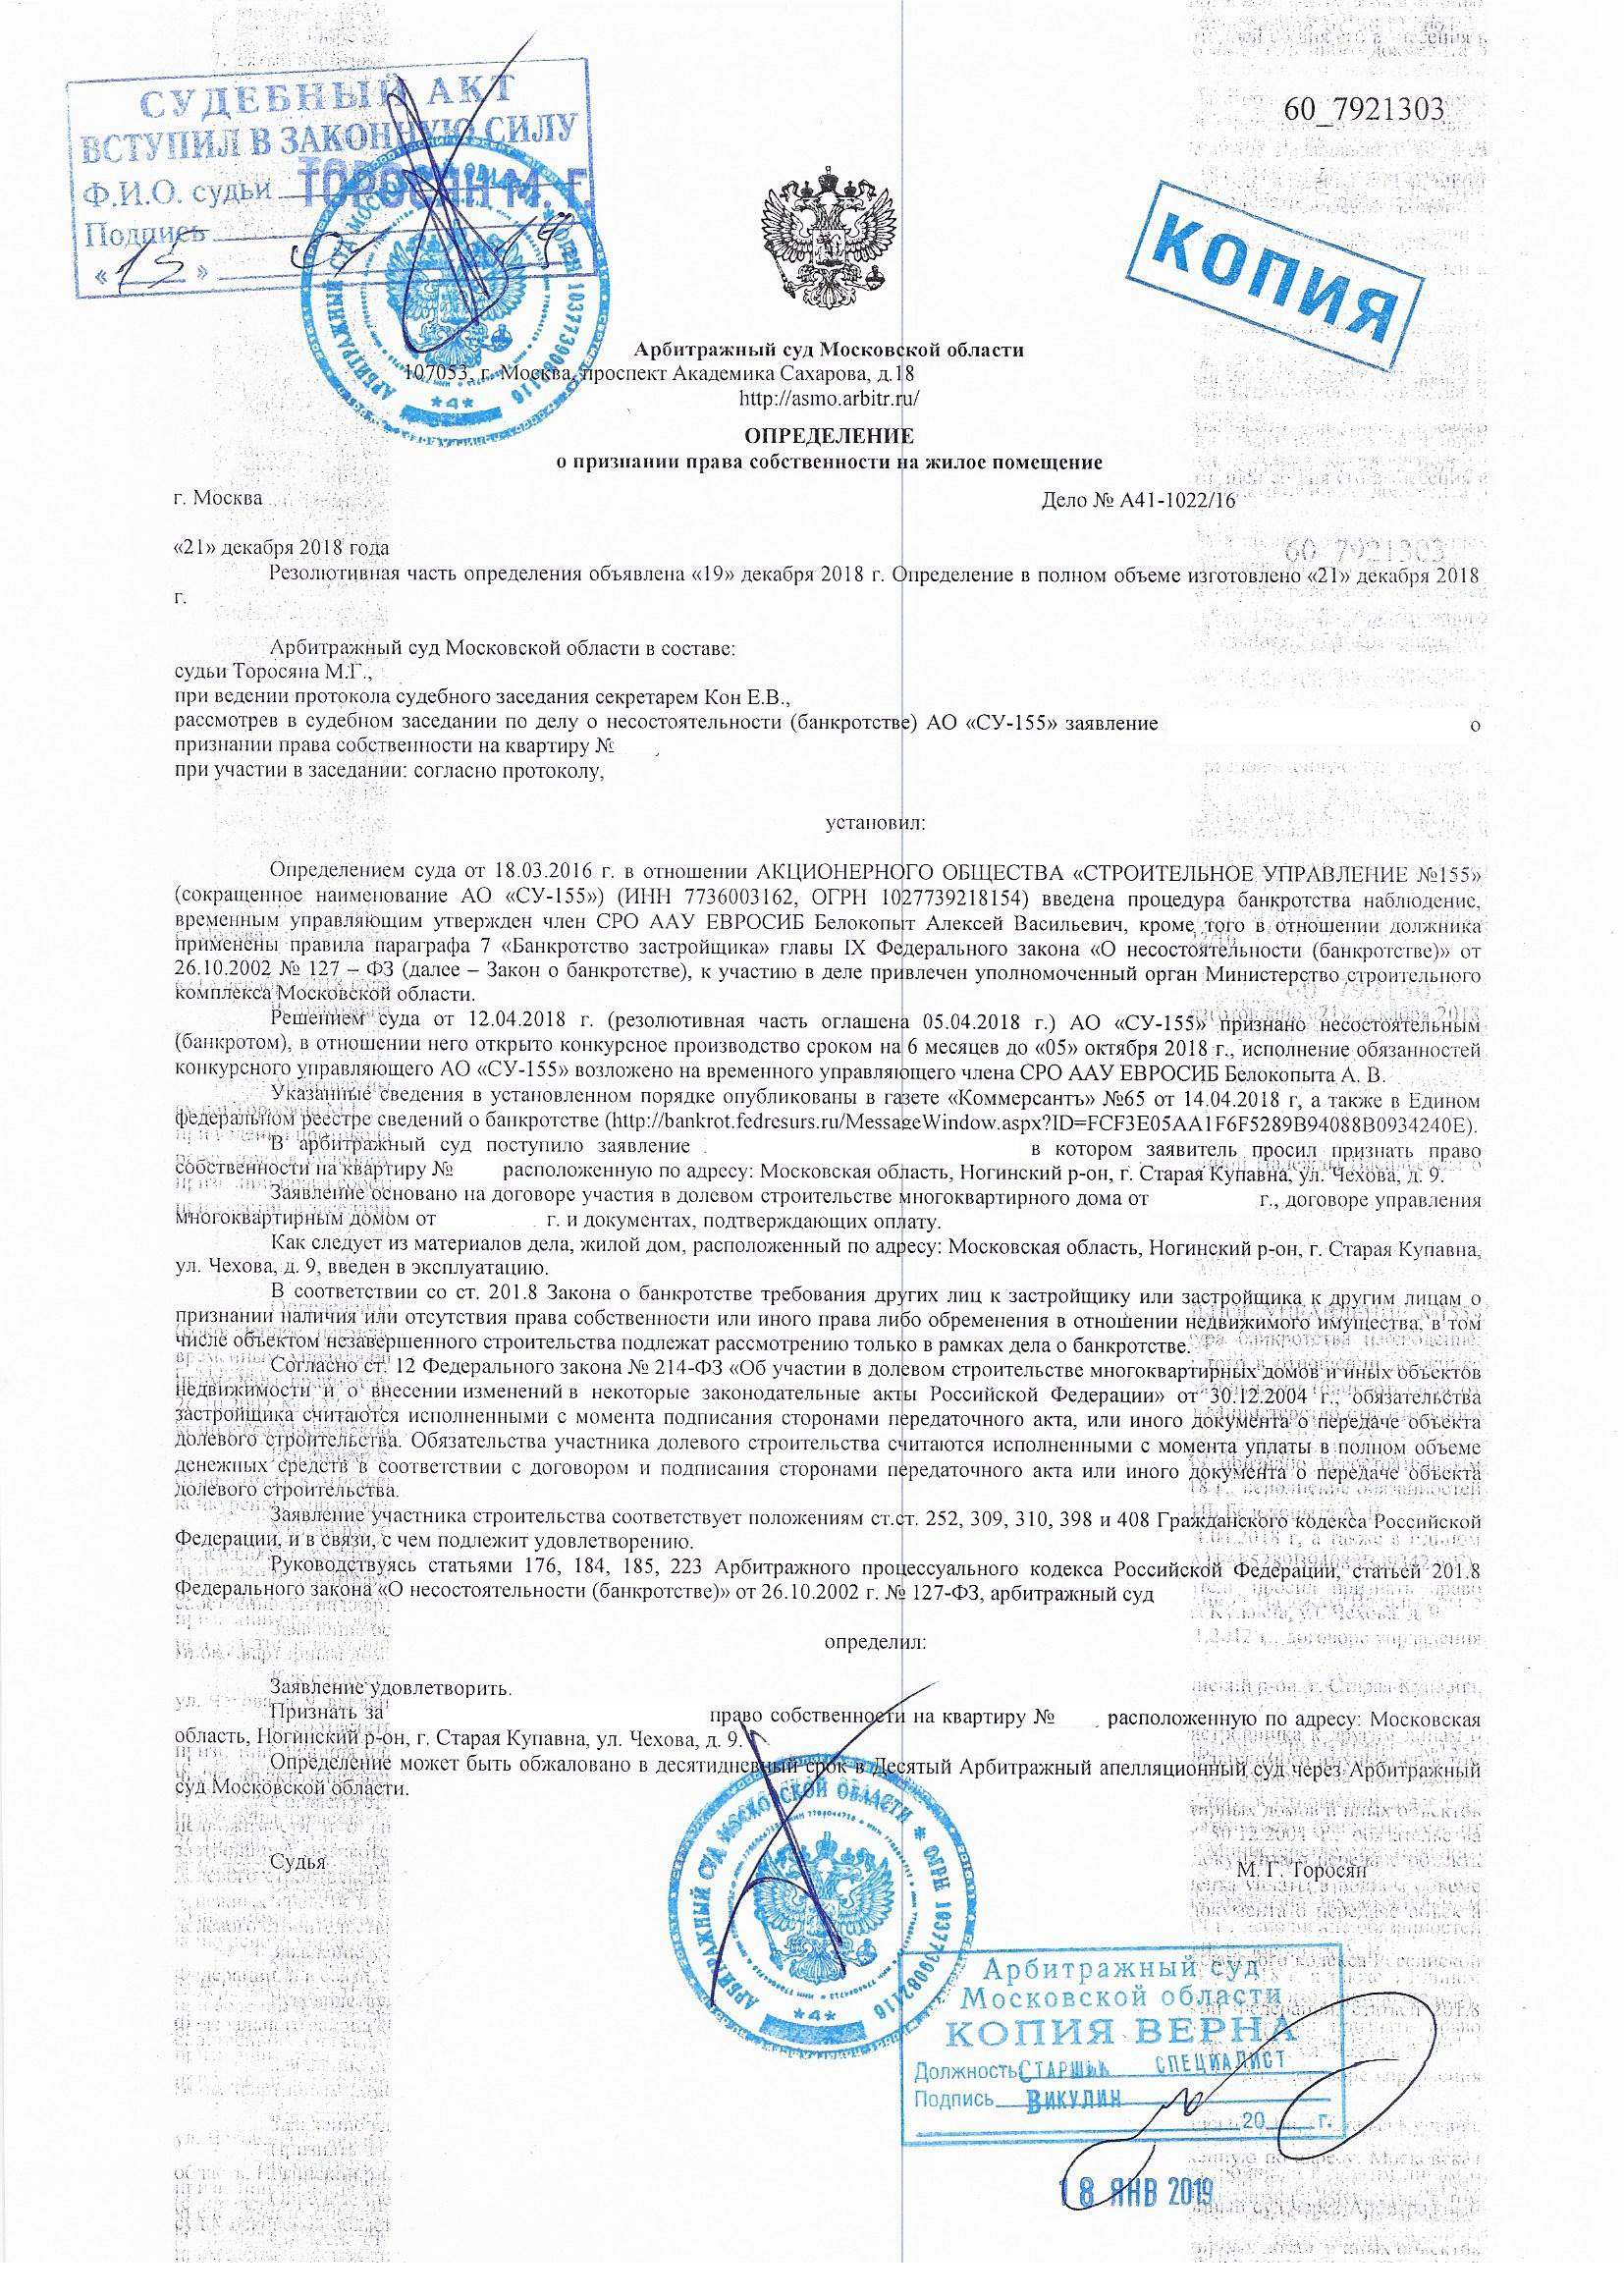 Признание права собственности на квартиры СУ-155 Старая Купавнна, ул. Чехова д. 9